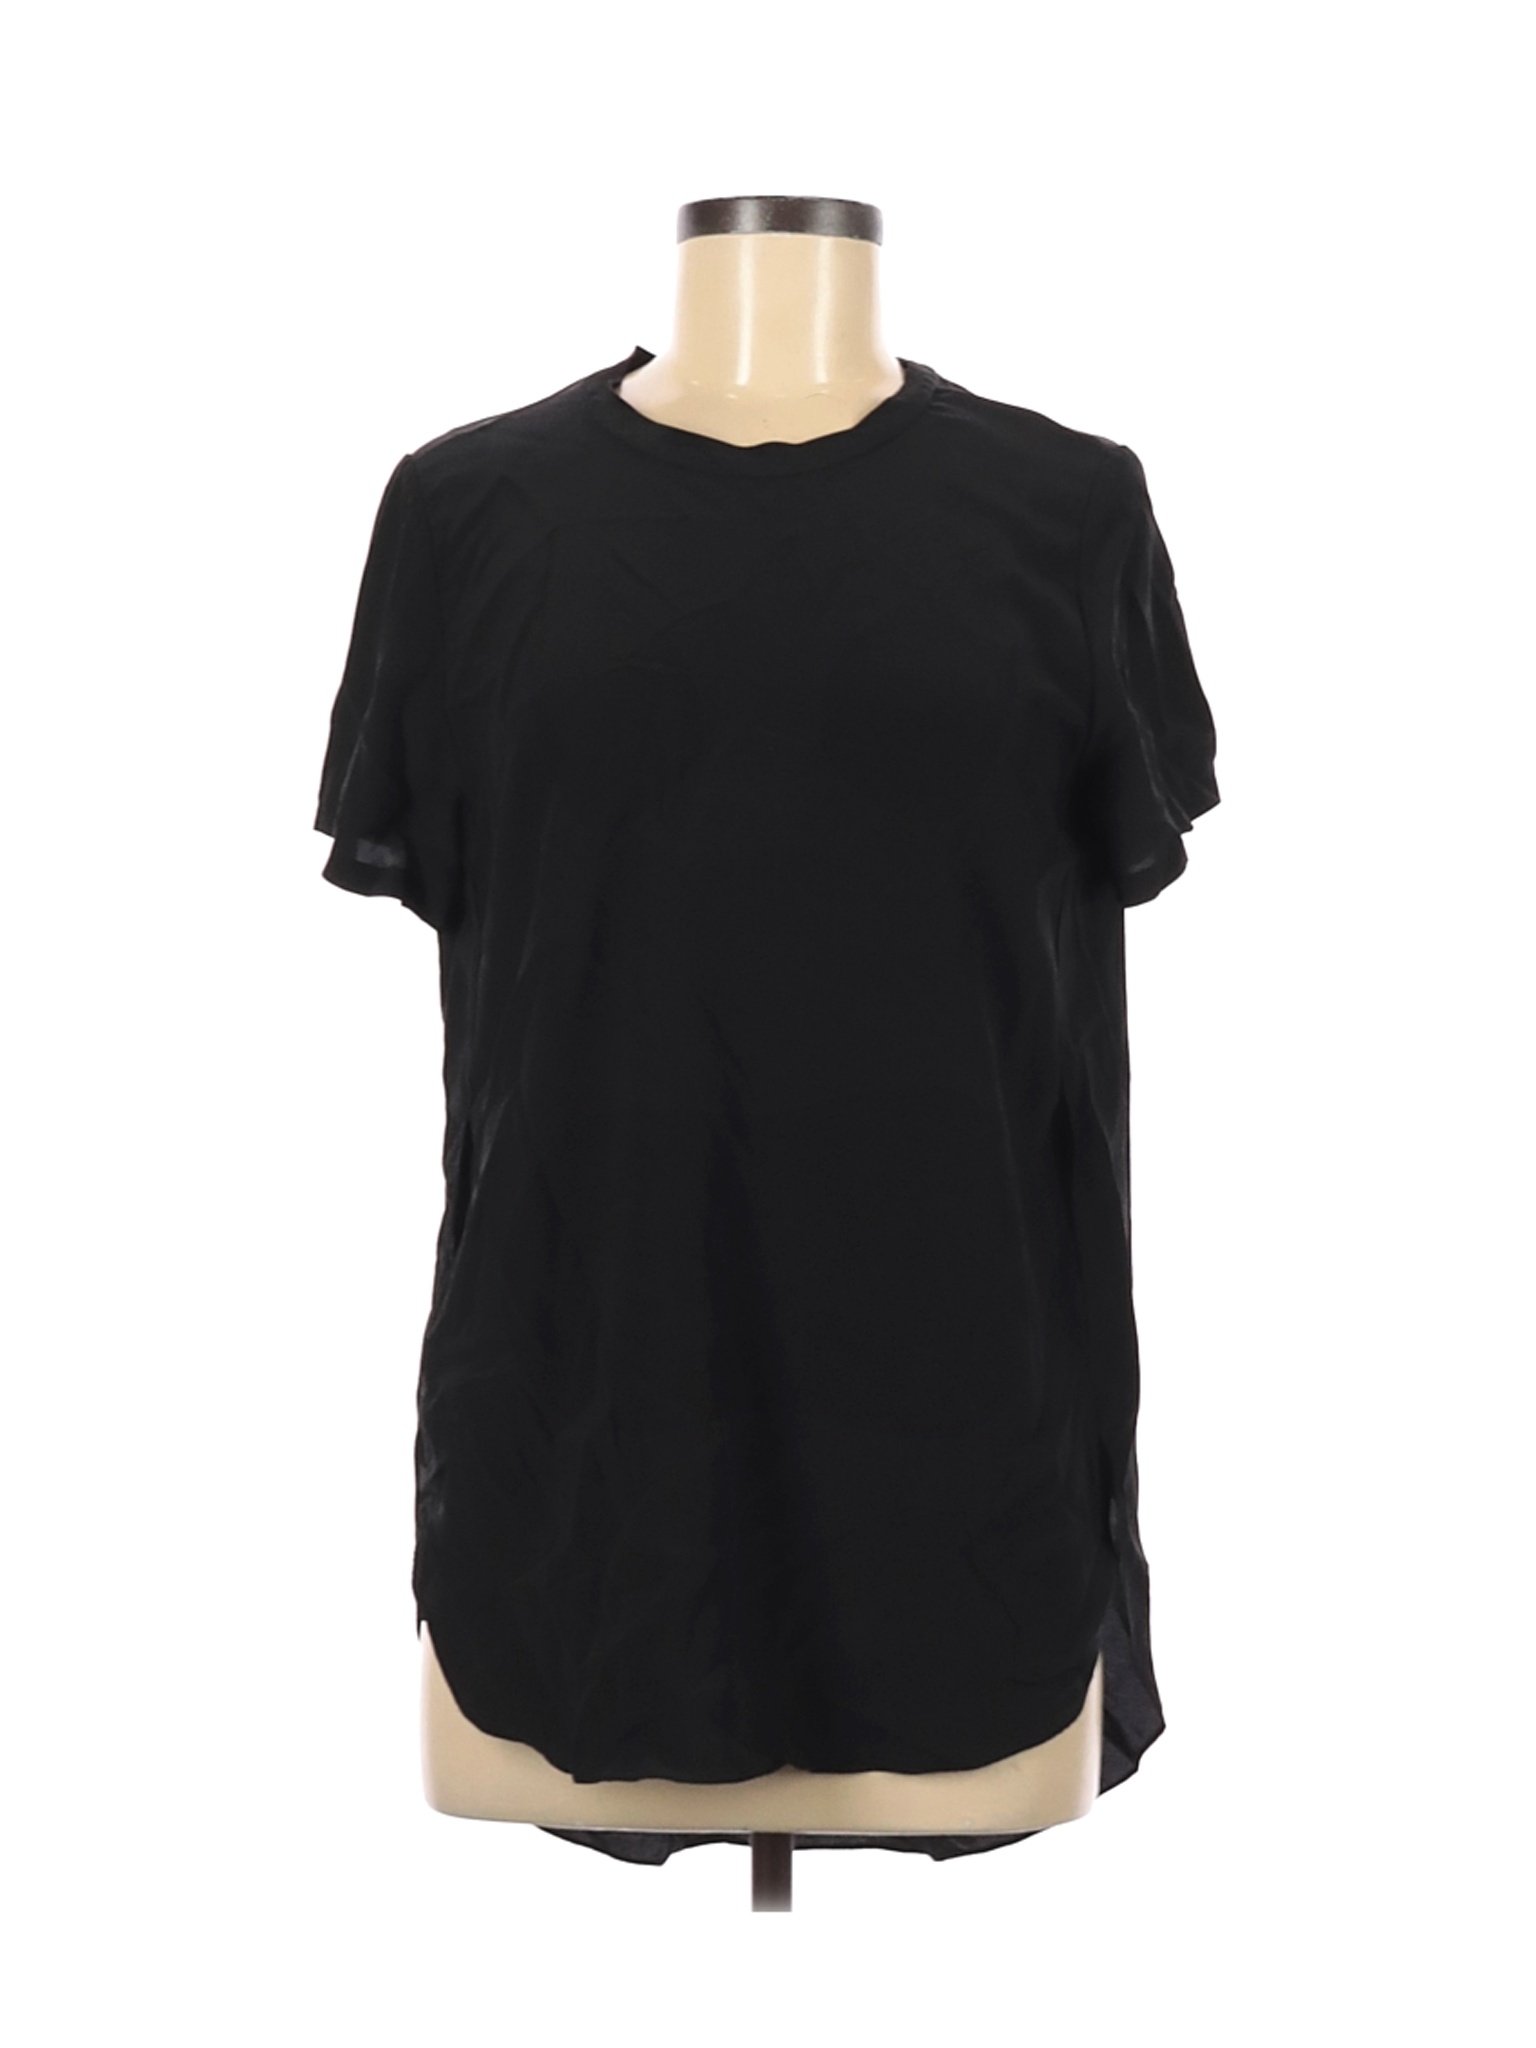 Wilfred Women Black Short Sleeve Silk Top M | eBay